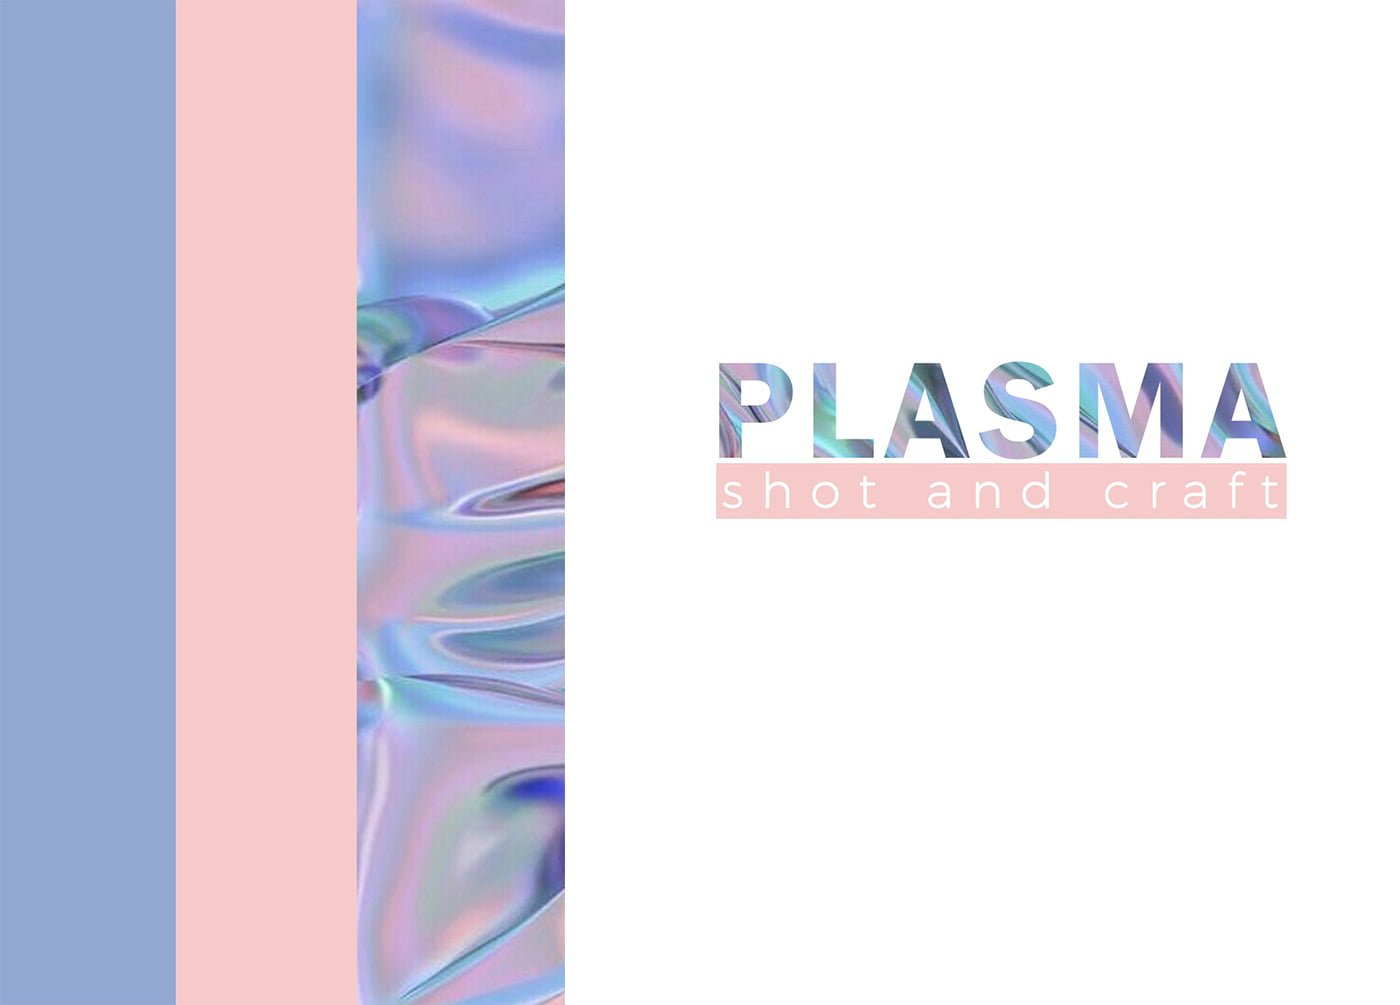 Plasma shot and craft